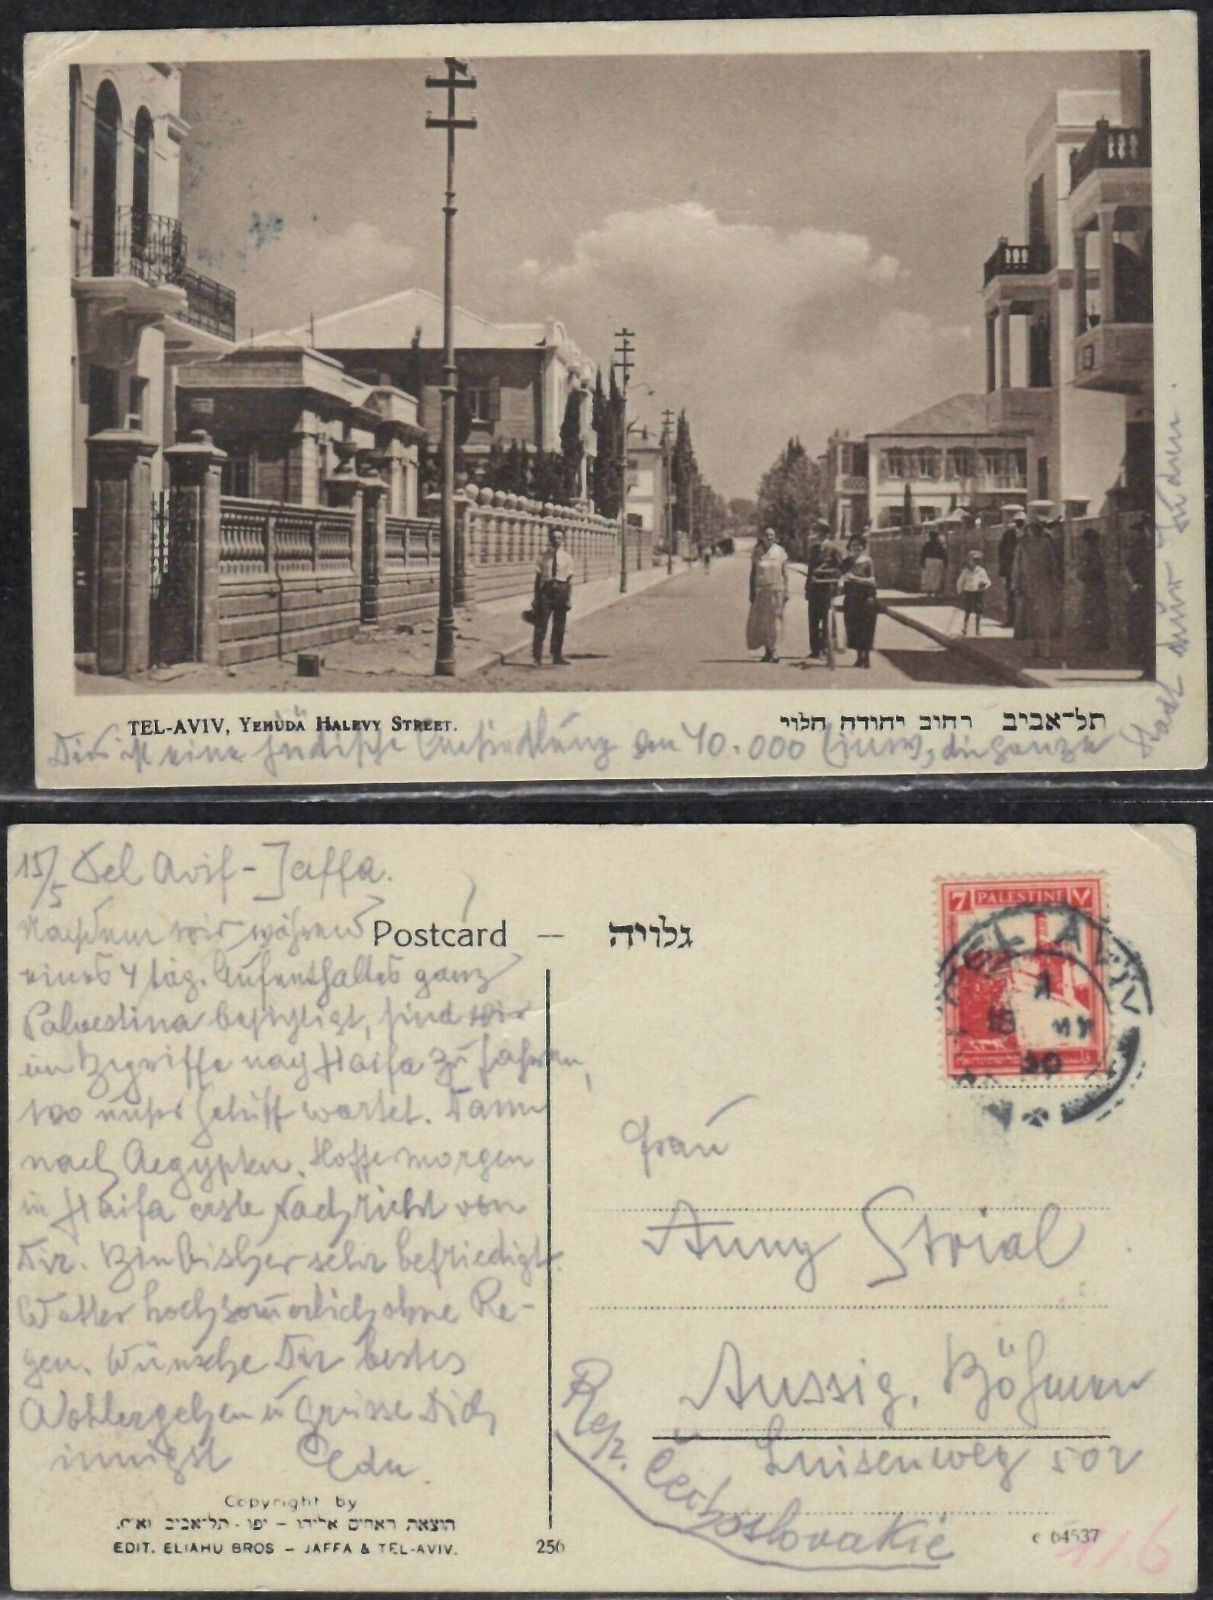 Tel Aviv Yehuda Halevy St. Israel Palestine postcard 1930 Publisher Elihah Broth